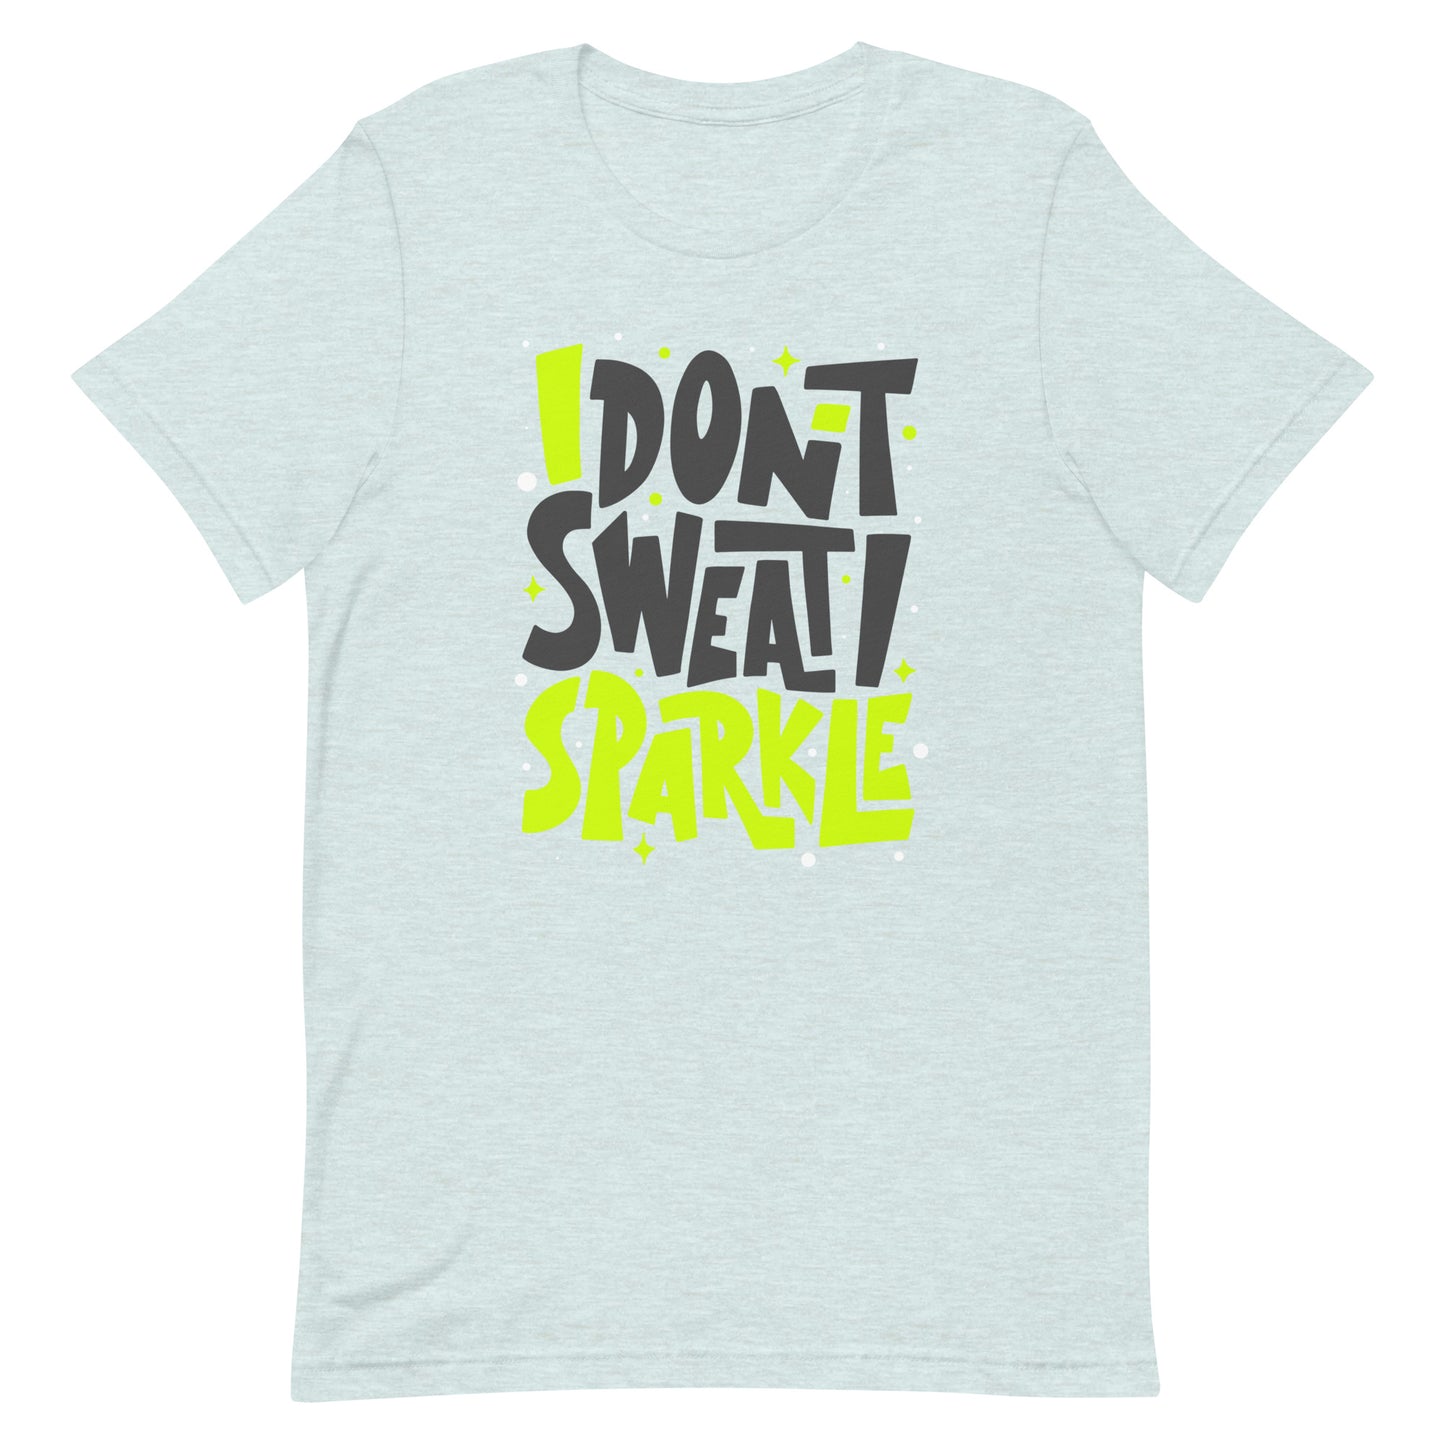 I don't sweat i sparkle t-shirt The Workout Inspiration